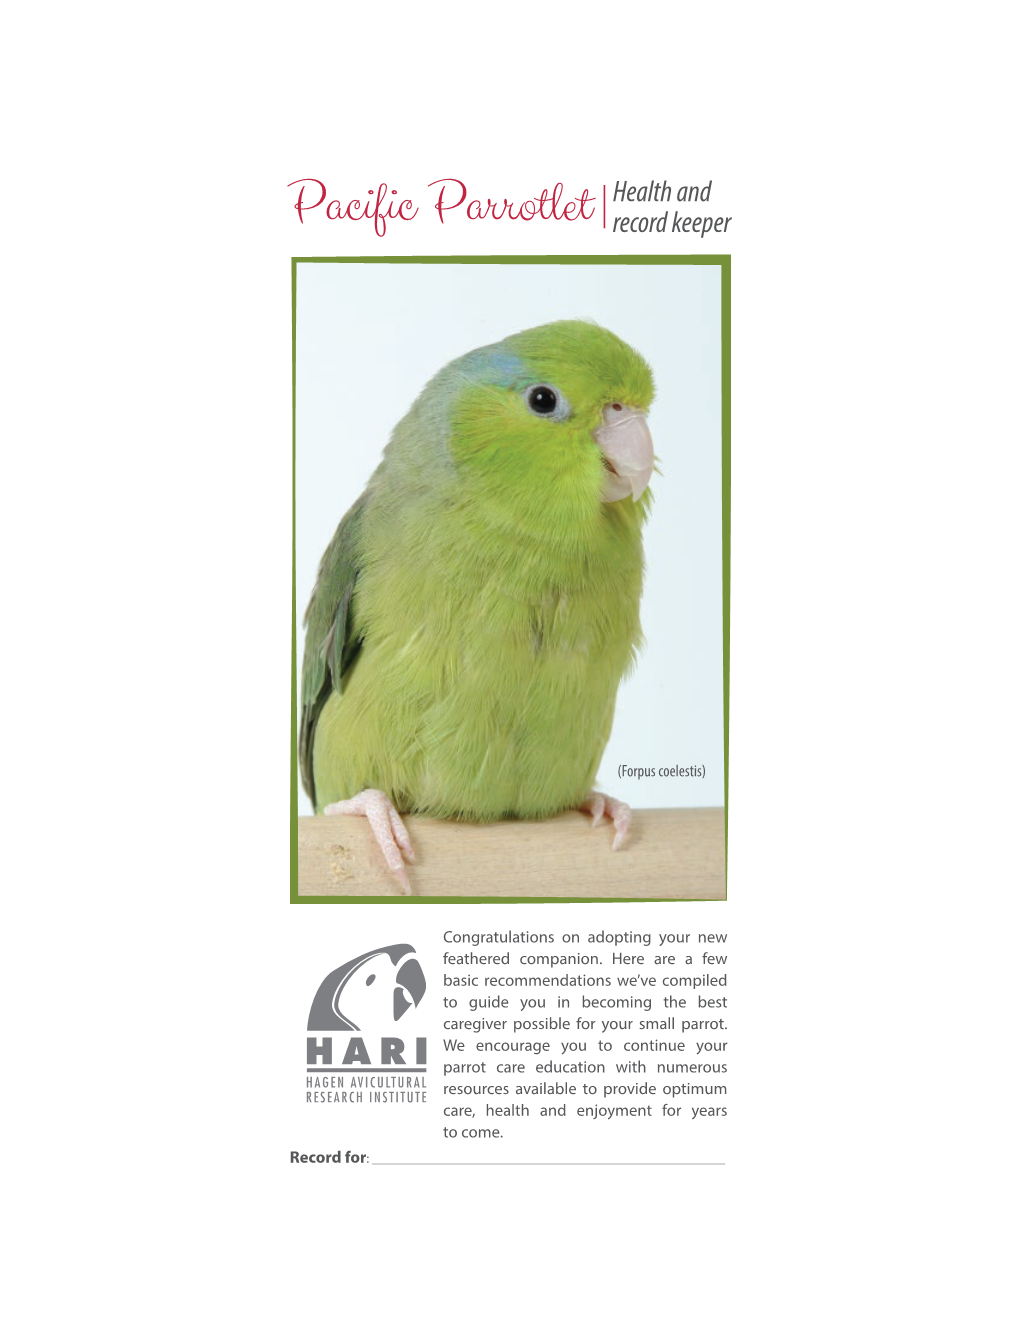 Pacific Parrotlet Health